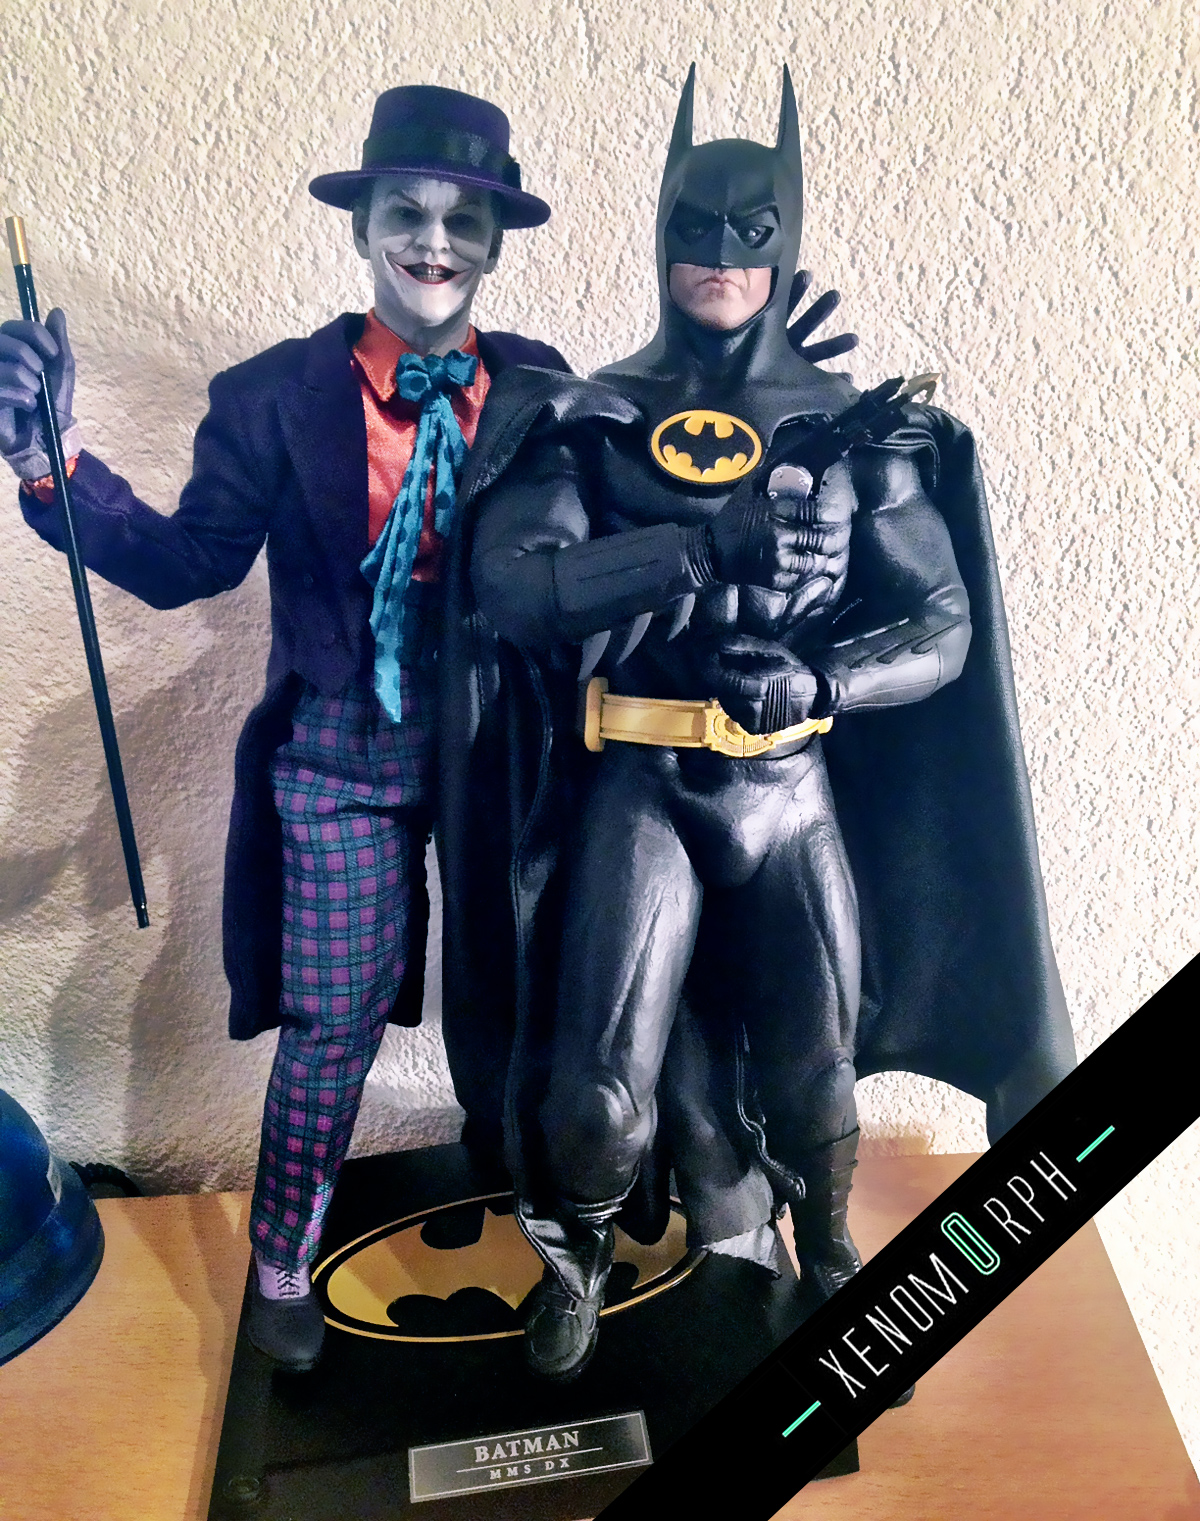 1989 Michael Keaton Batman and Batmobile Return as Hot Toys